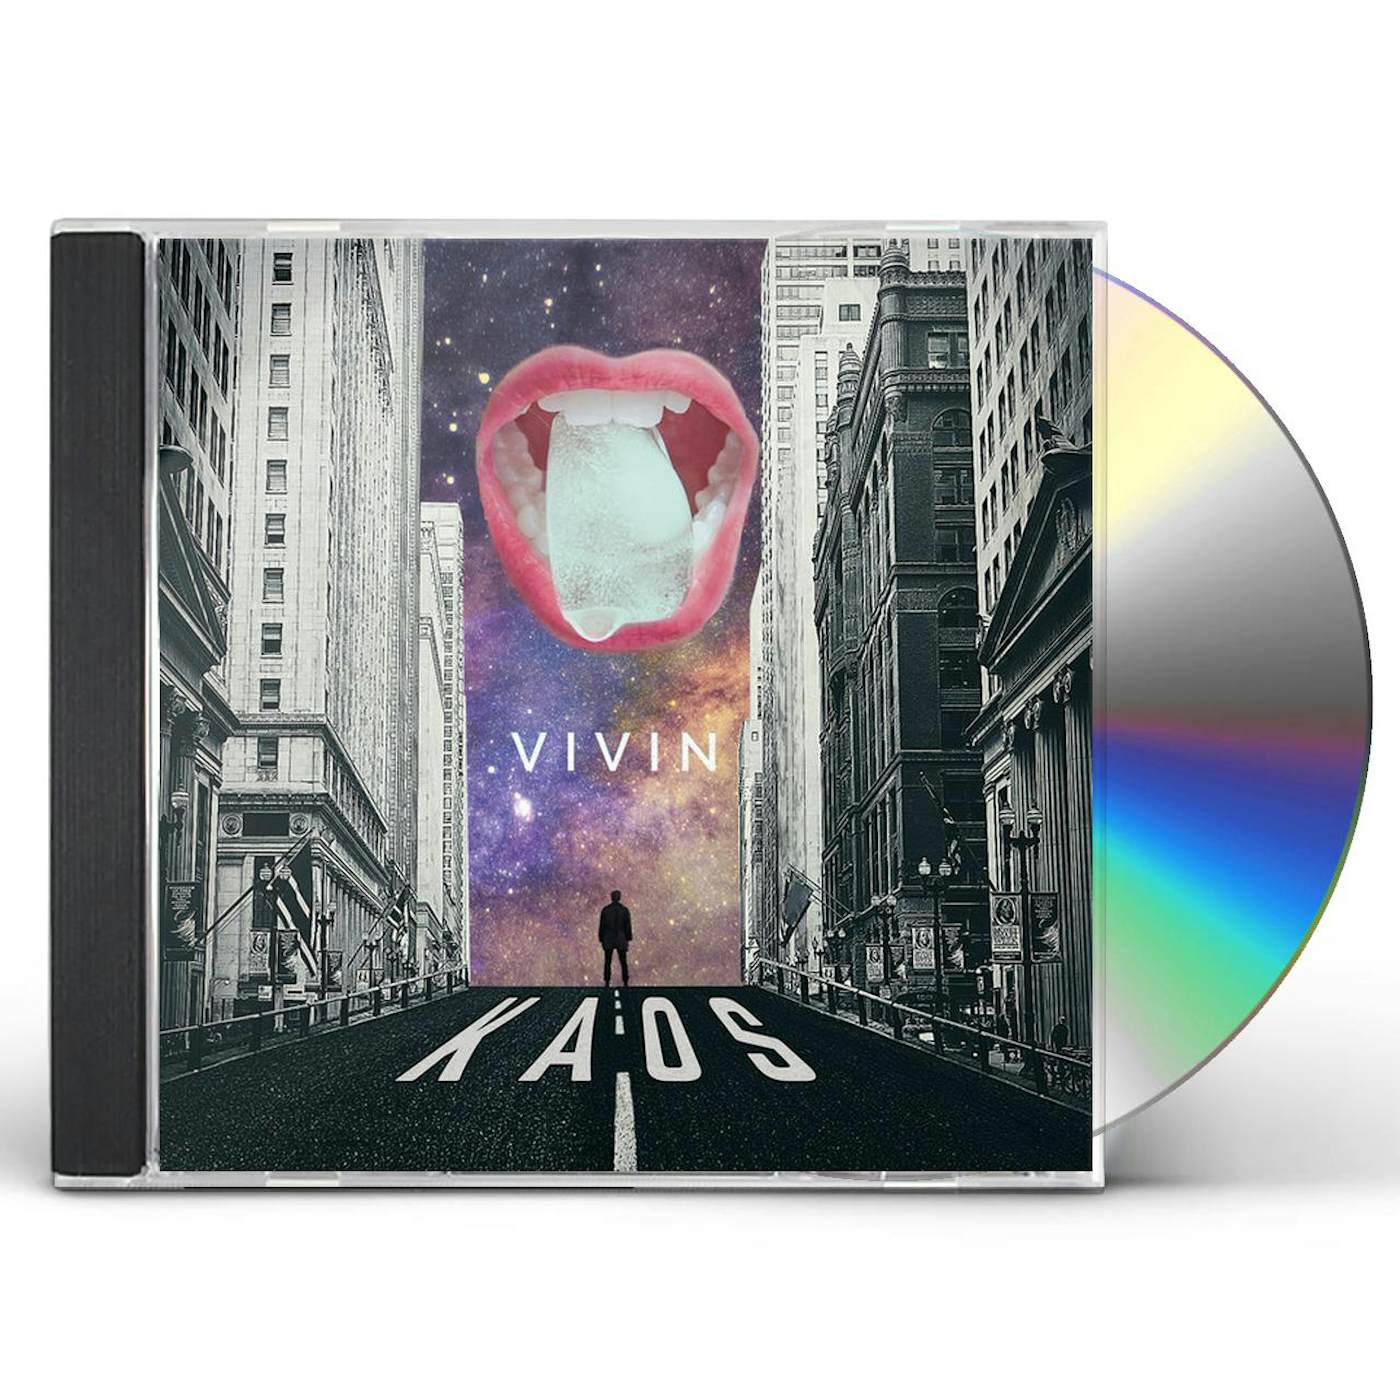 VIVIN KAOS CD